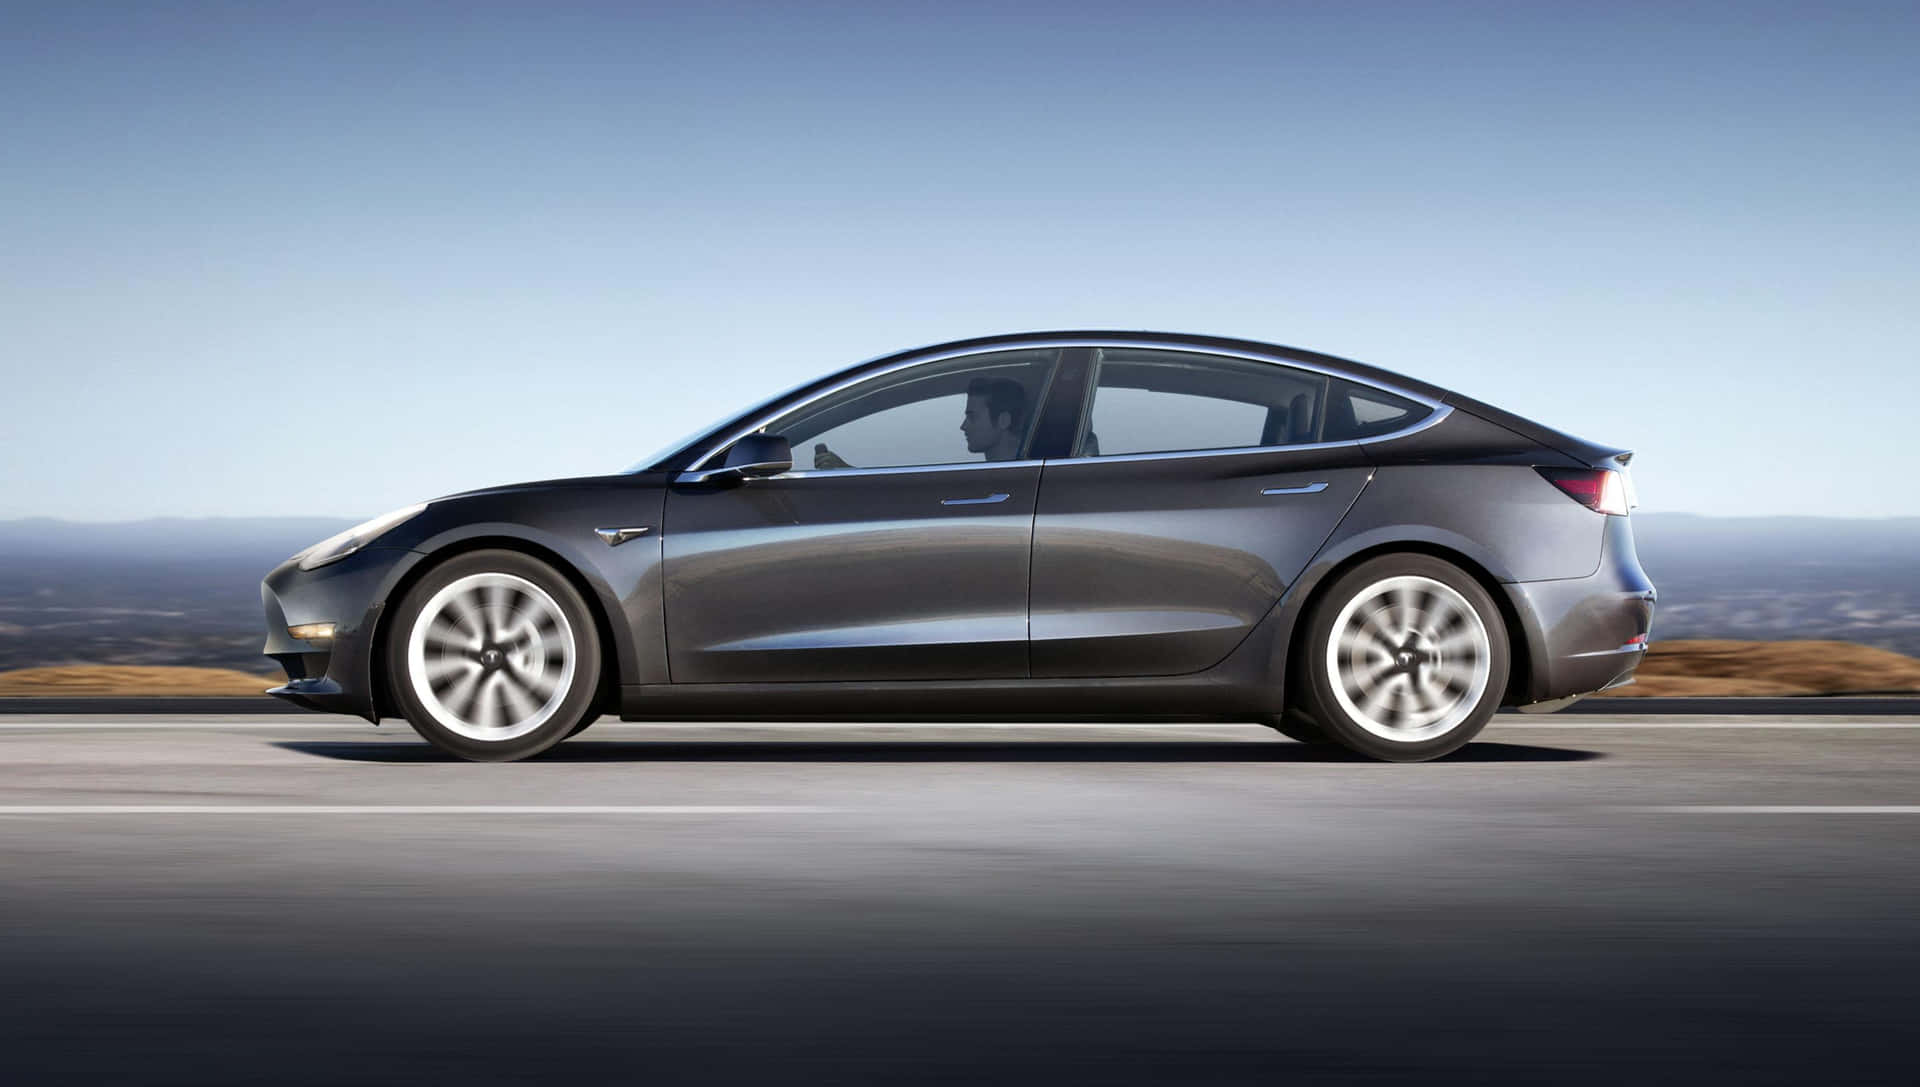 Stylish and Innovative, the Tesla Model 3